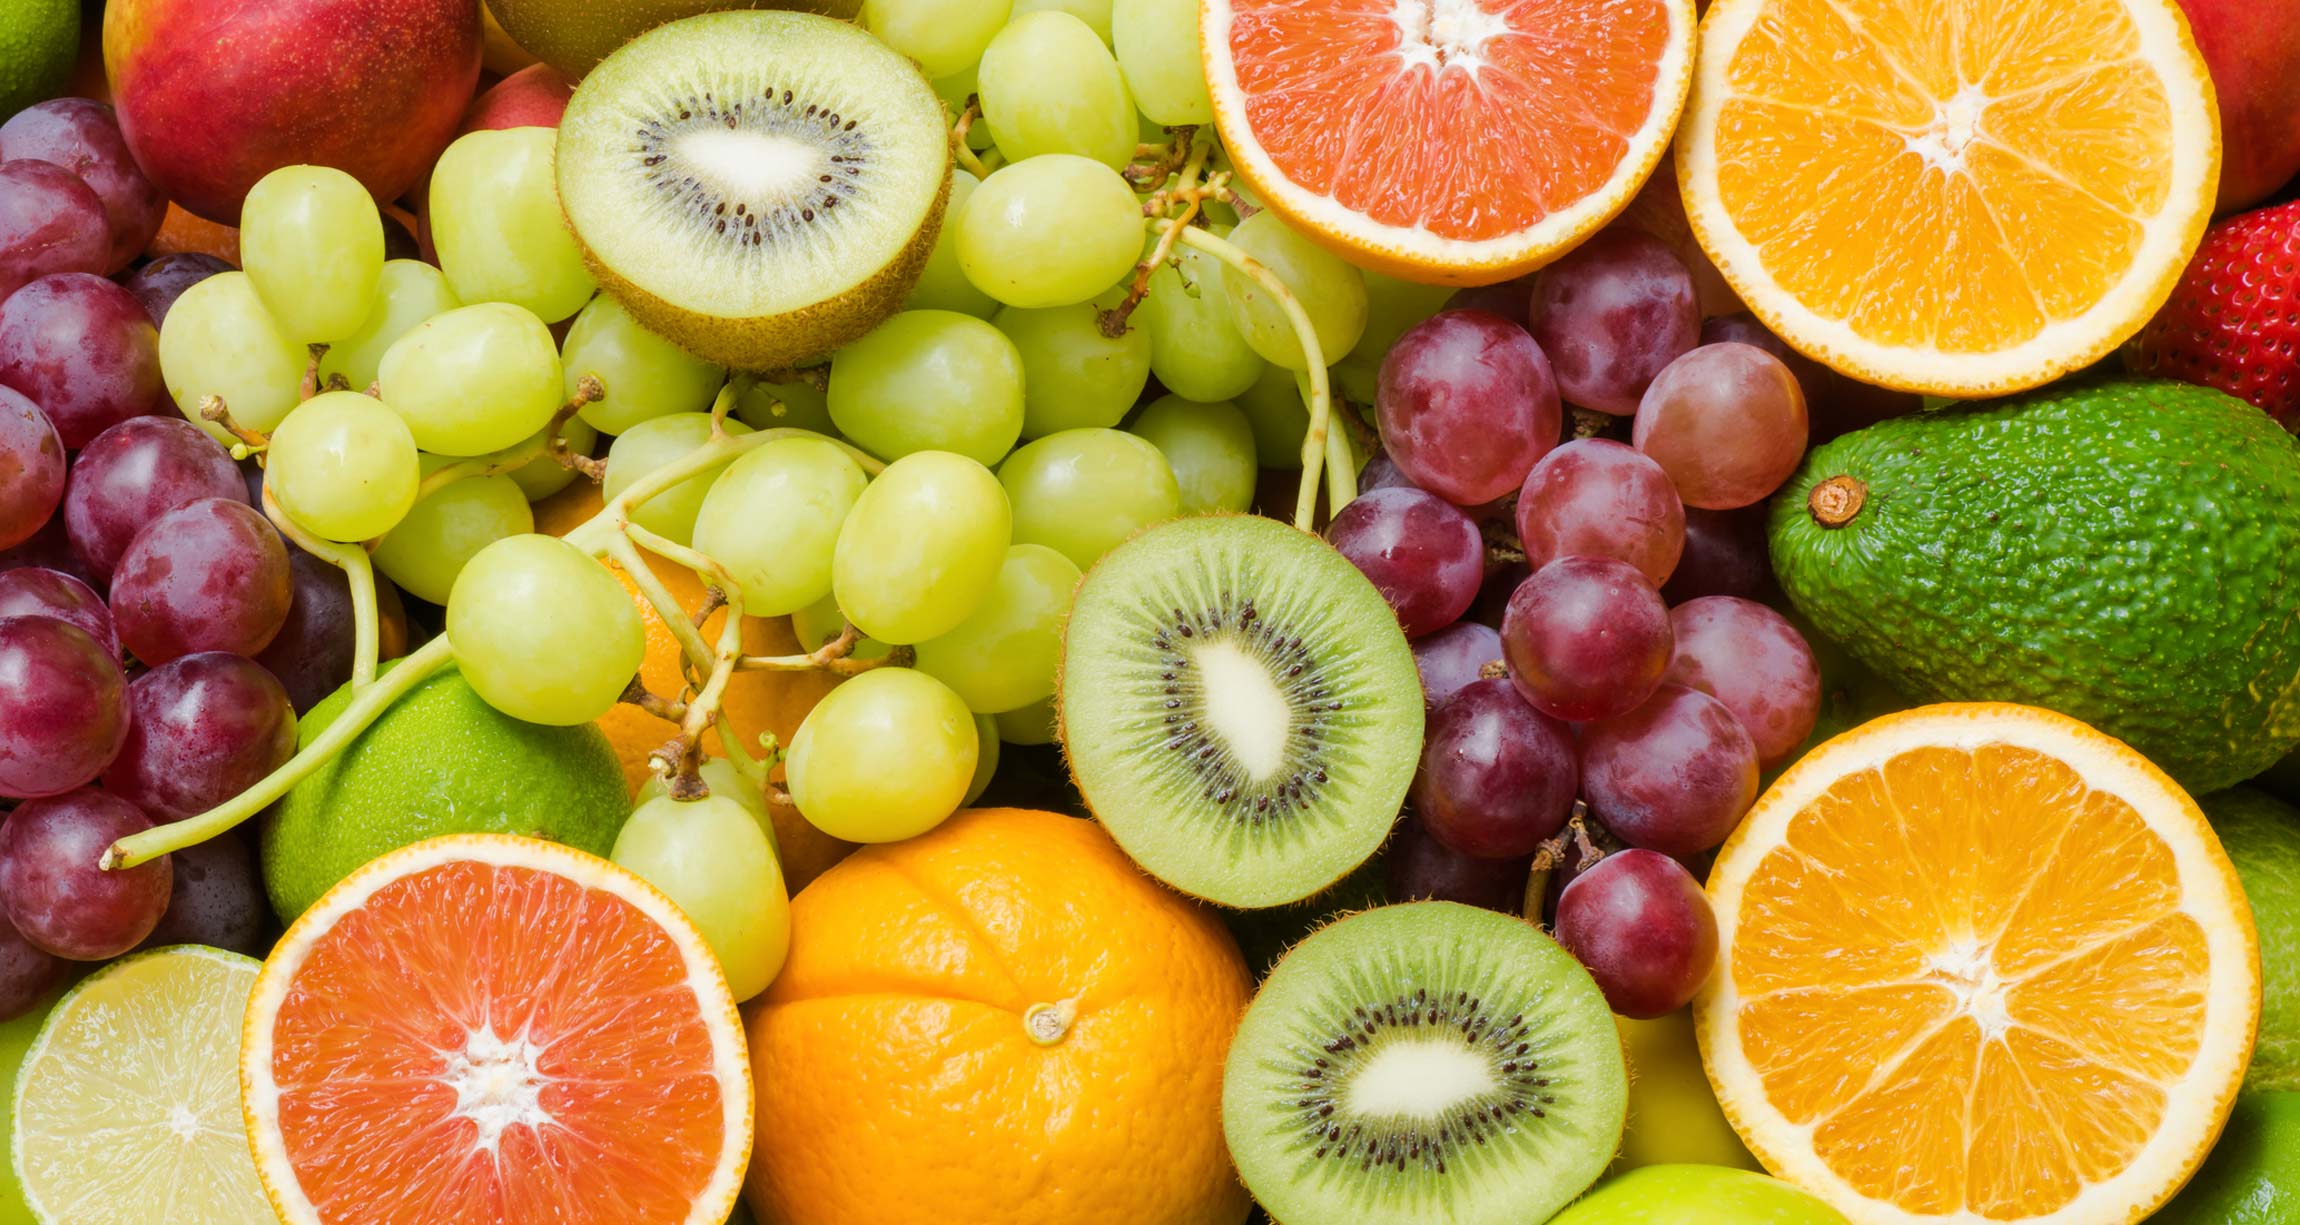 Image result for fruits